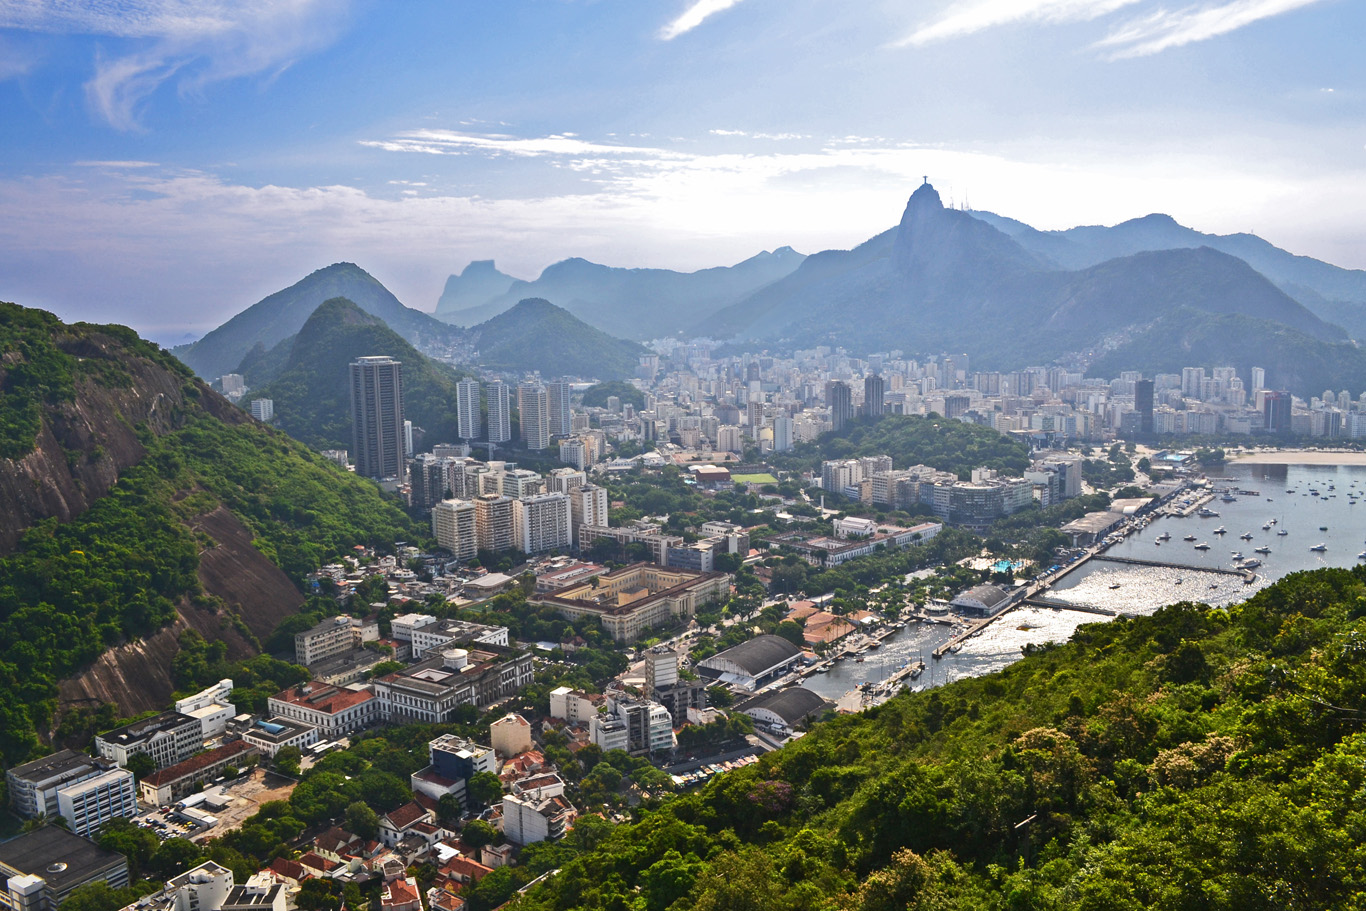 Destination Rio de Janeiro! Spend 48h in this wonderful city